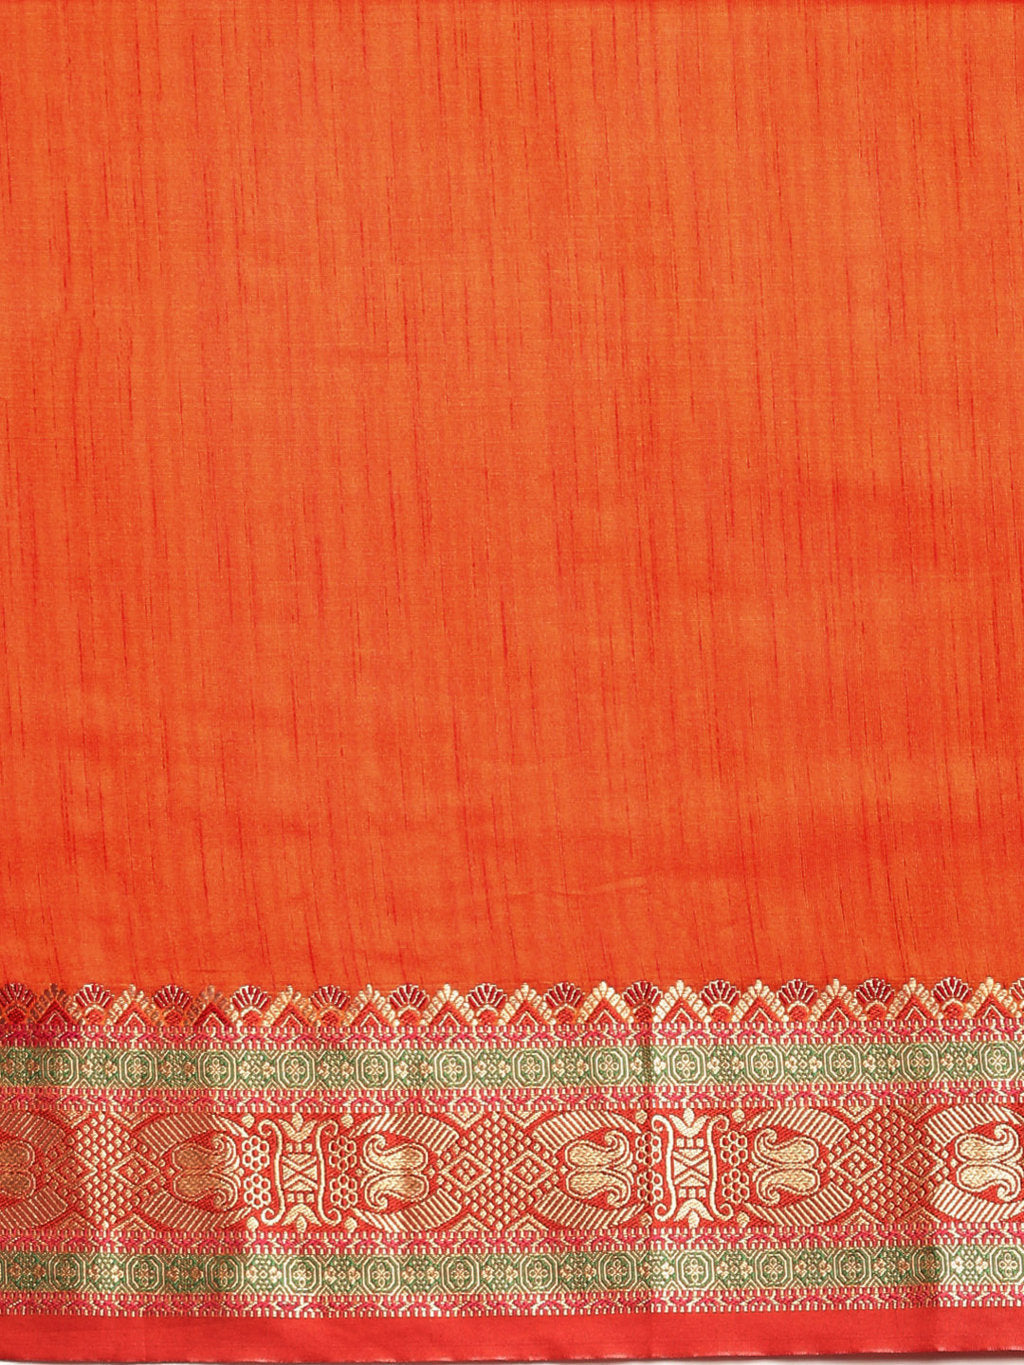 Women's Orange Silk Woven Work Traditional Tassle Saree - Sangam Prints